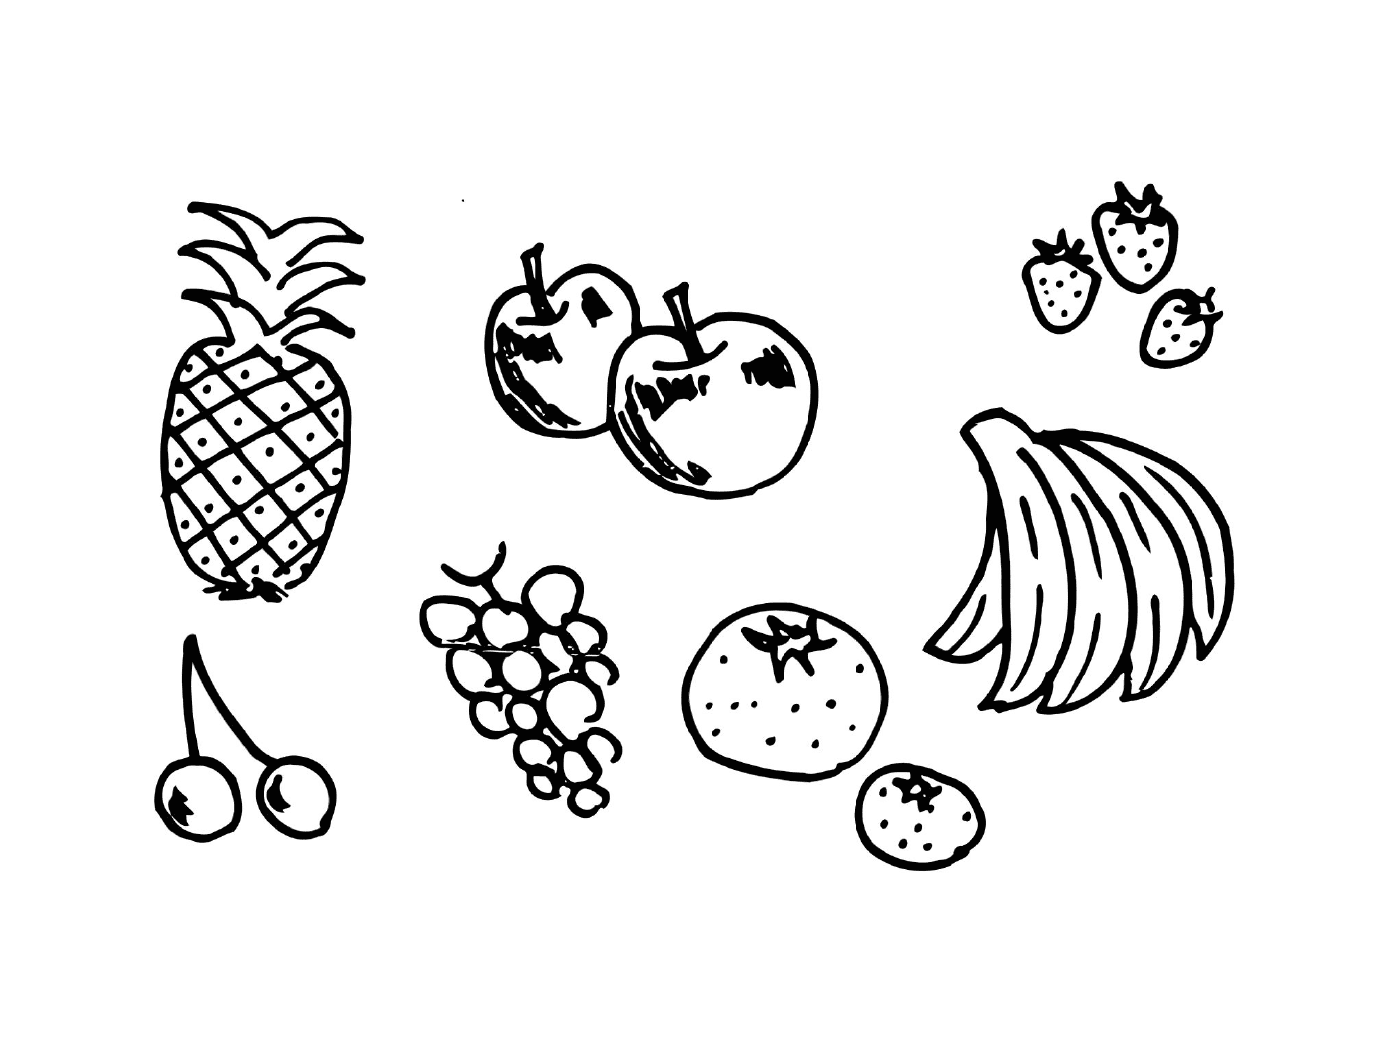  Assortment of various fruits 